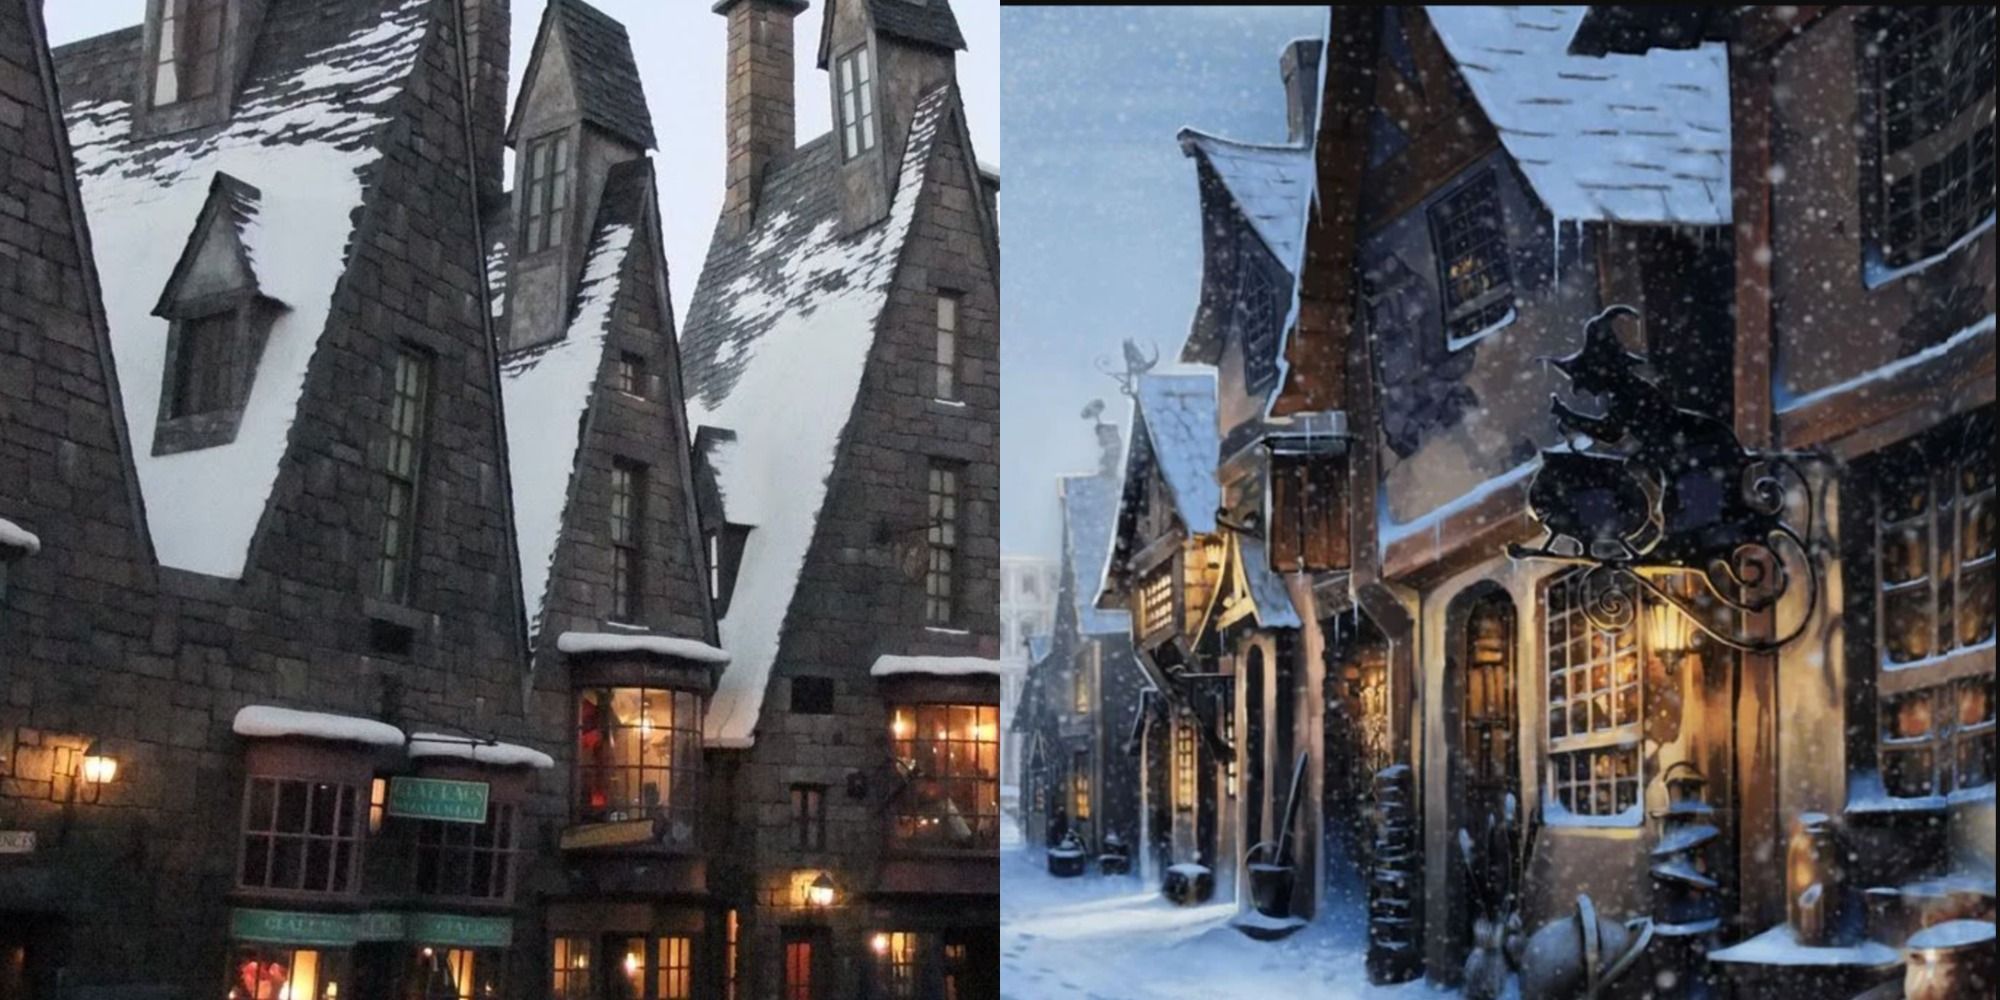 Split image of Hogsmeade - illustration on right and movie still on left